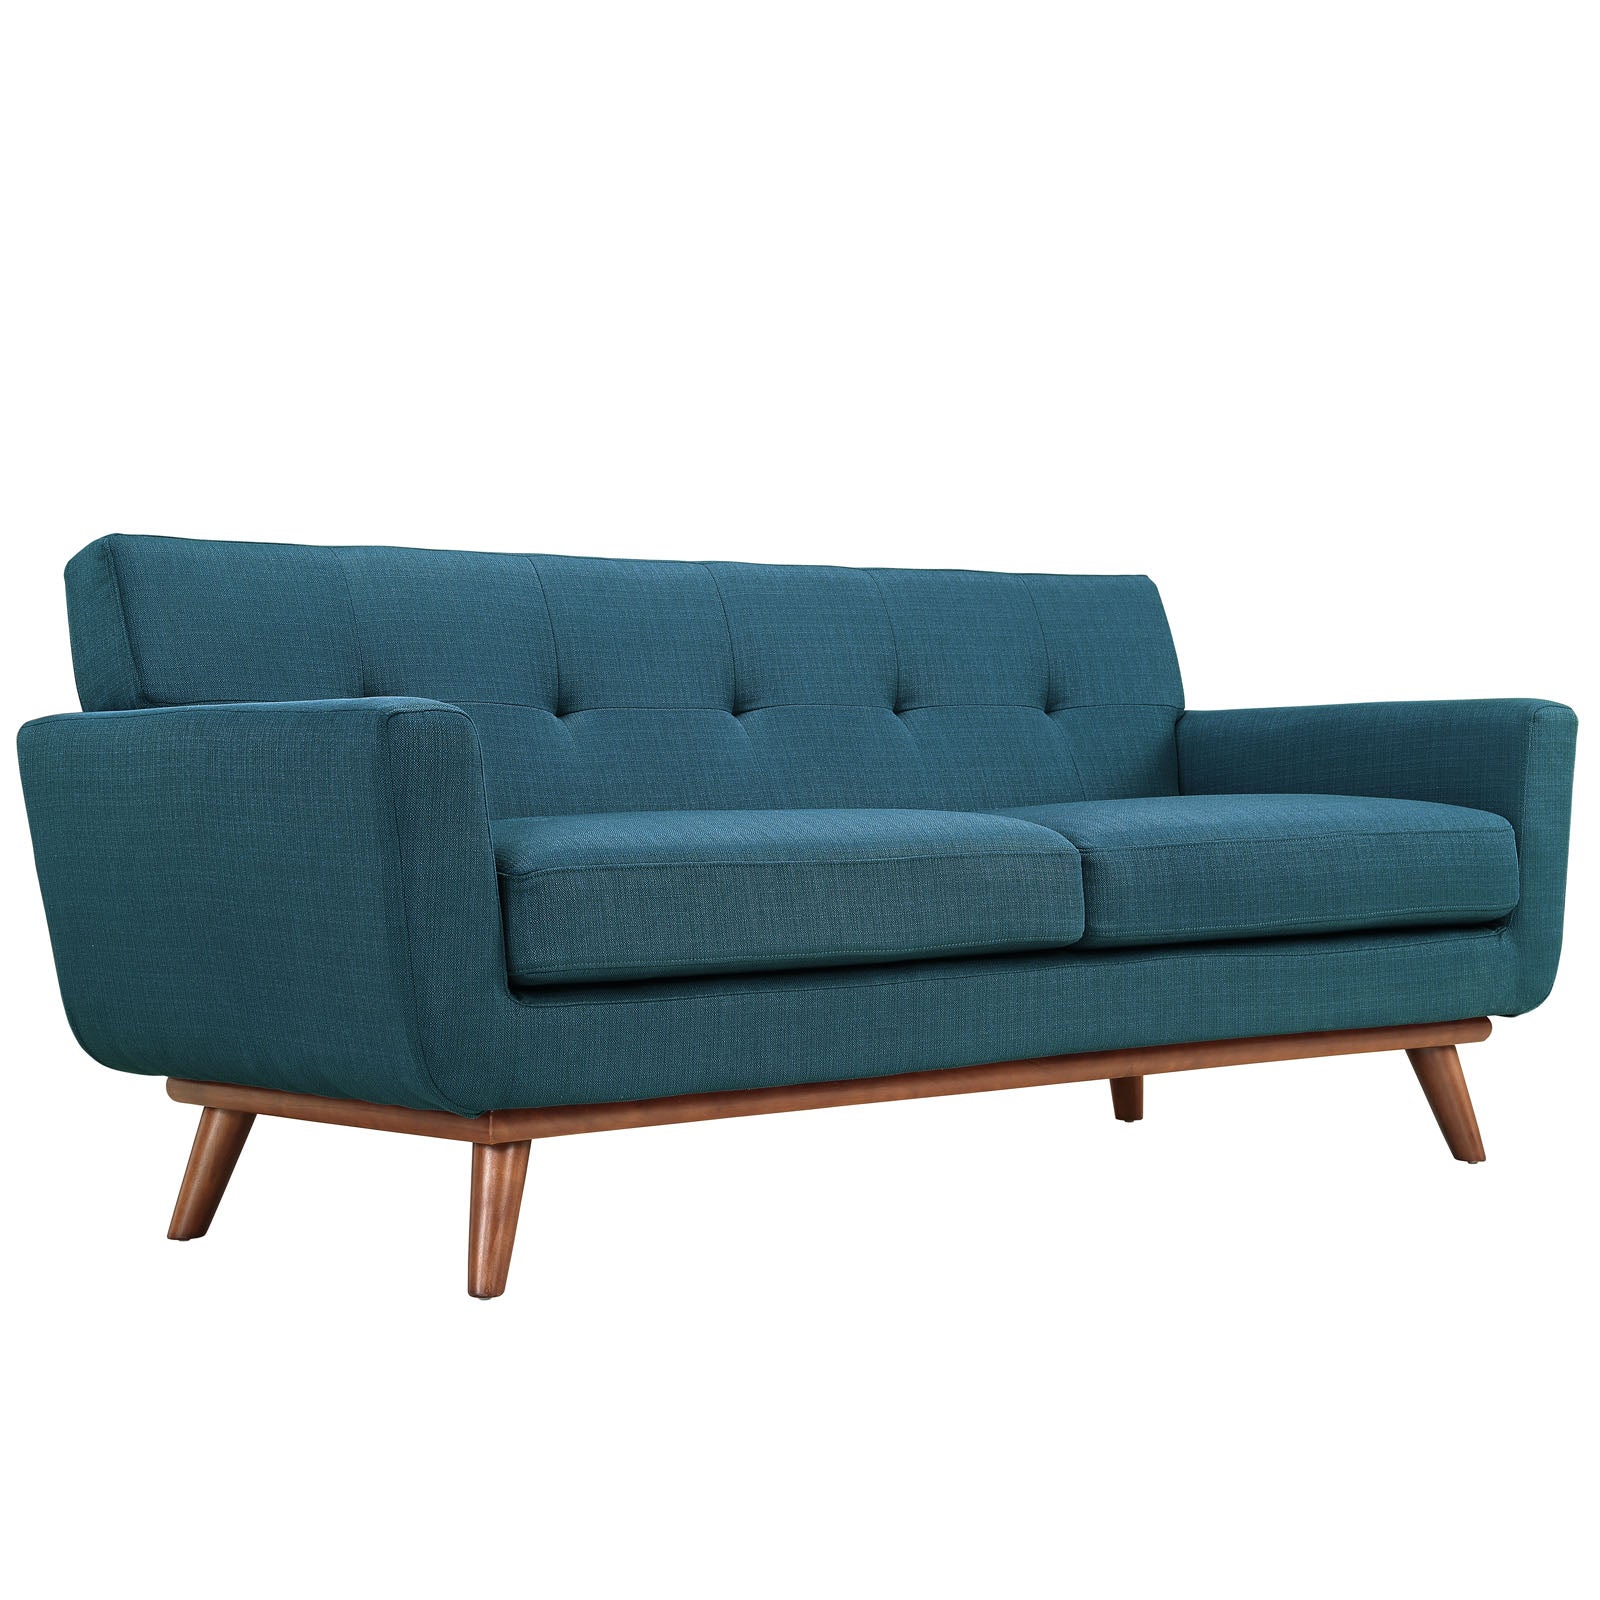 Modway Living Room Sets - Engage 2 Piece Loveseat & Sofa Set Azure